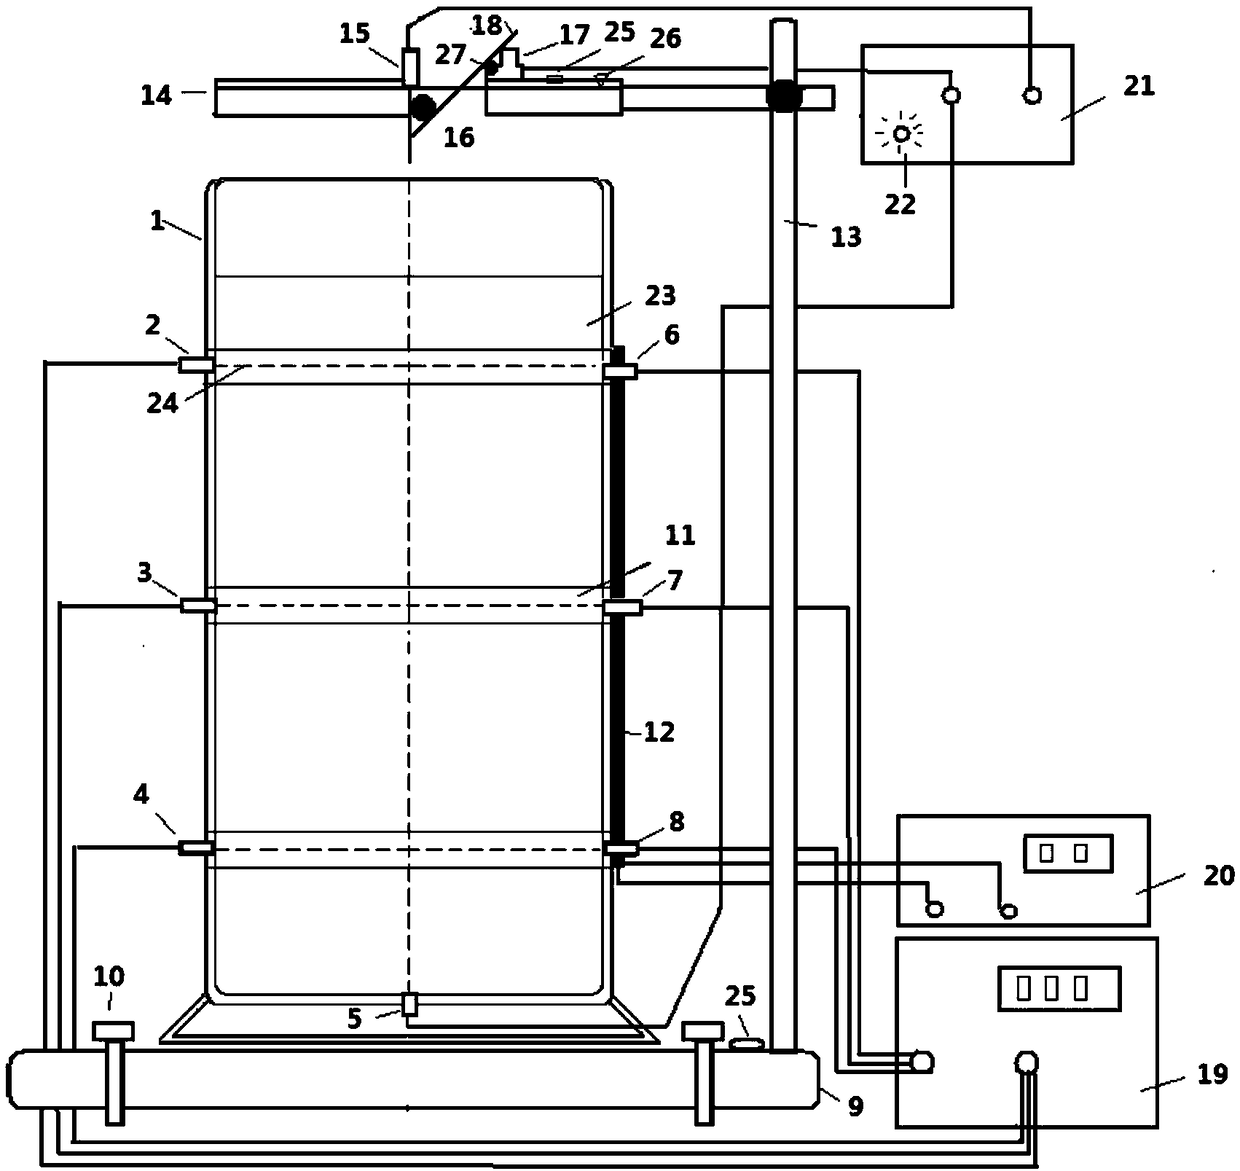 A three-dimensional laser positioning liquid viscosity coefficient measuring instrument